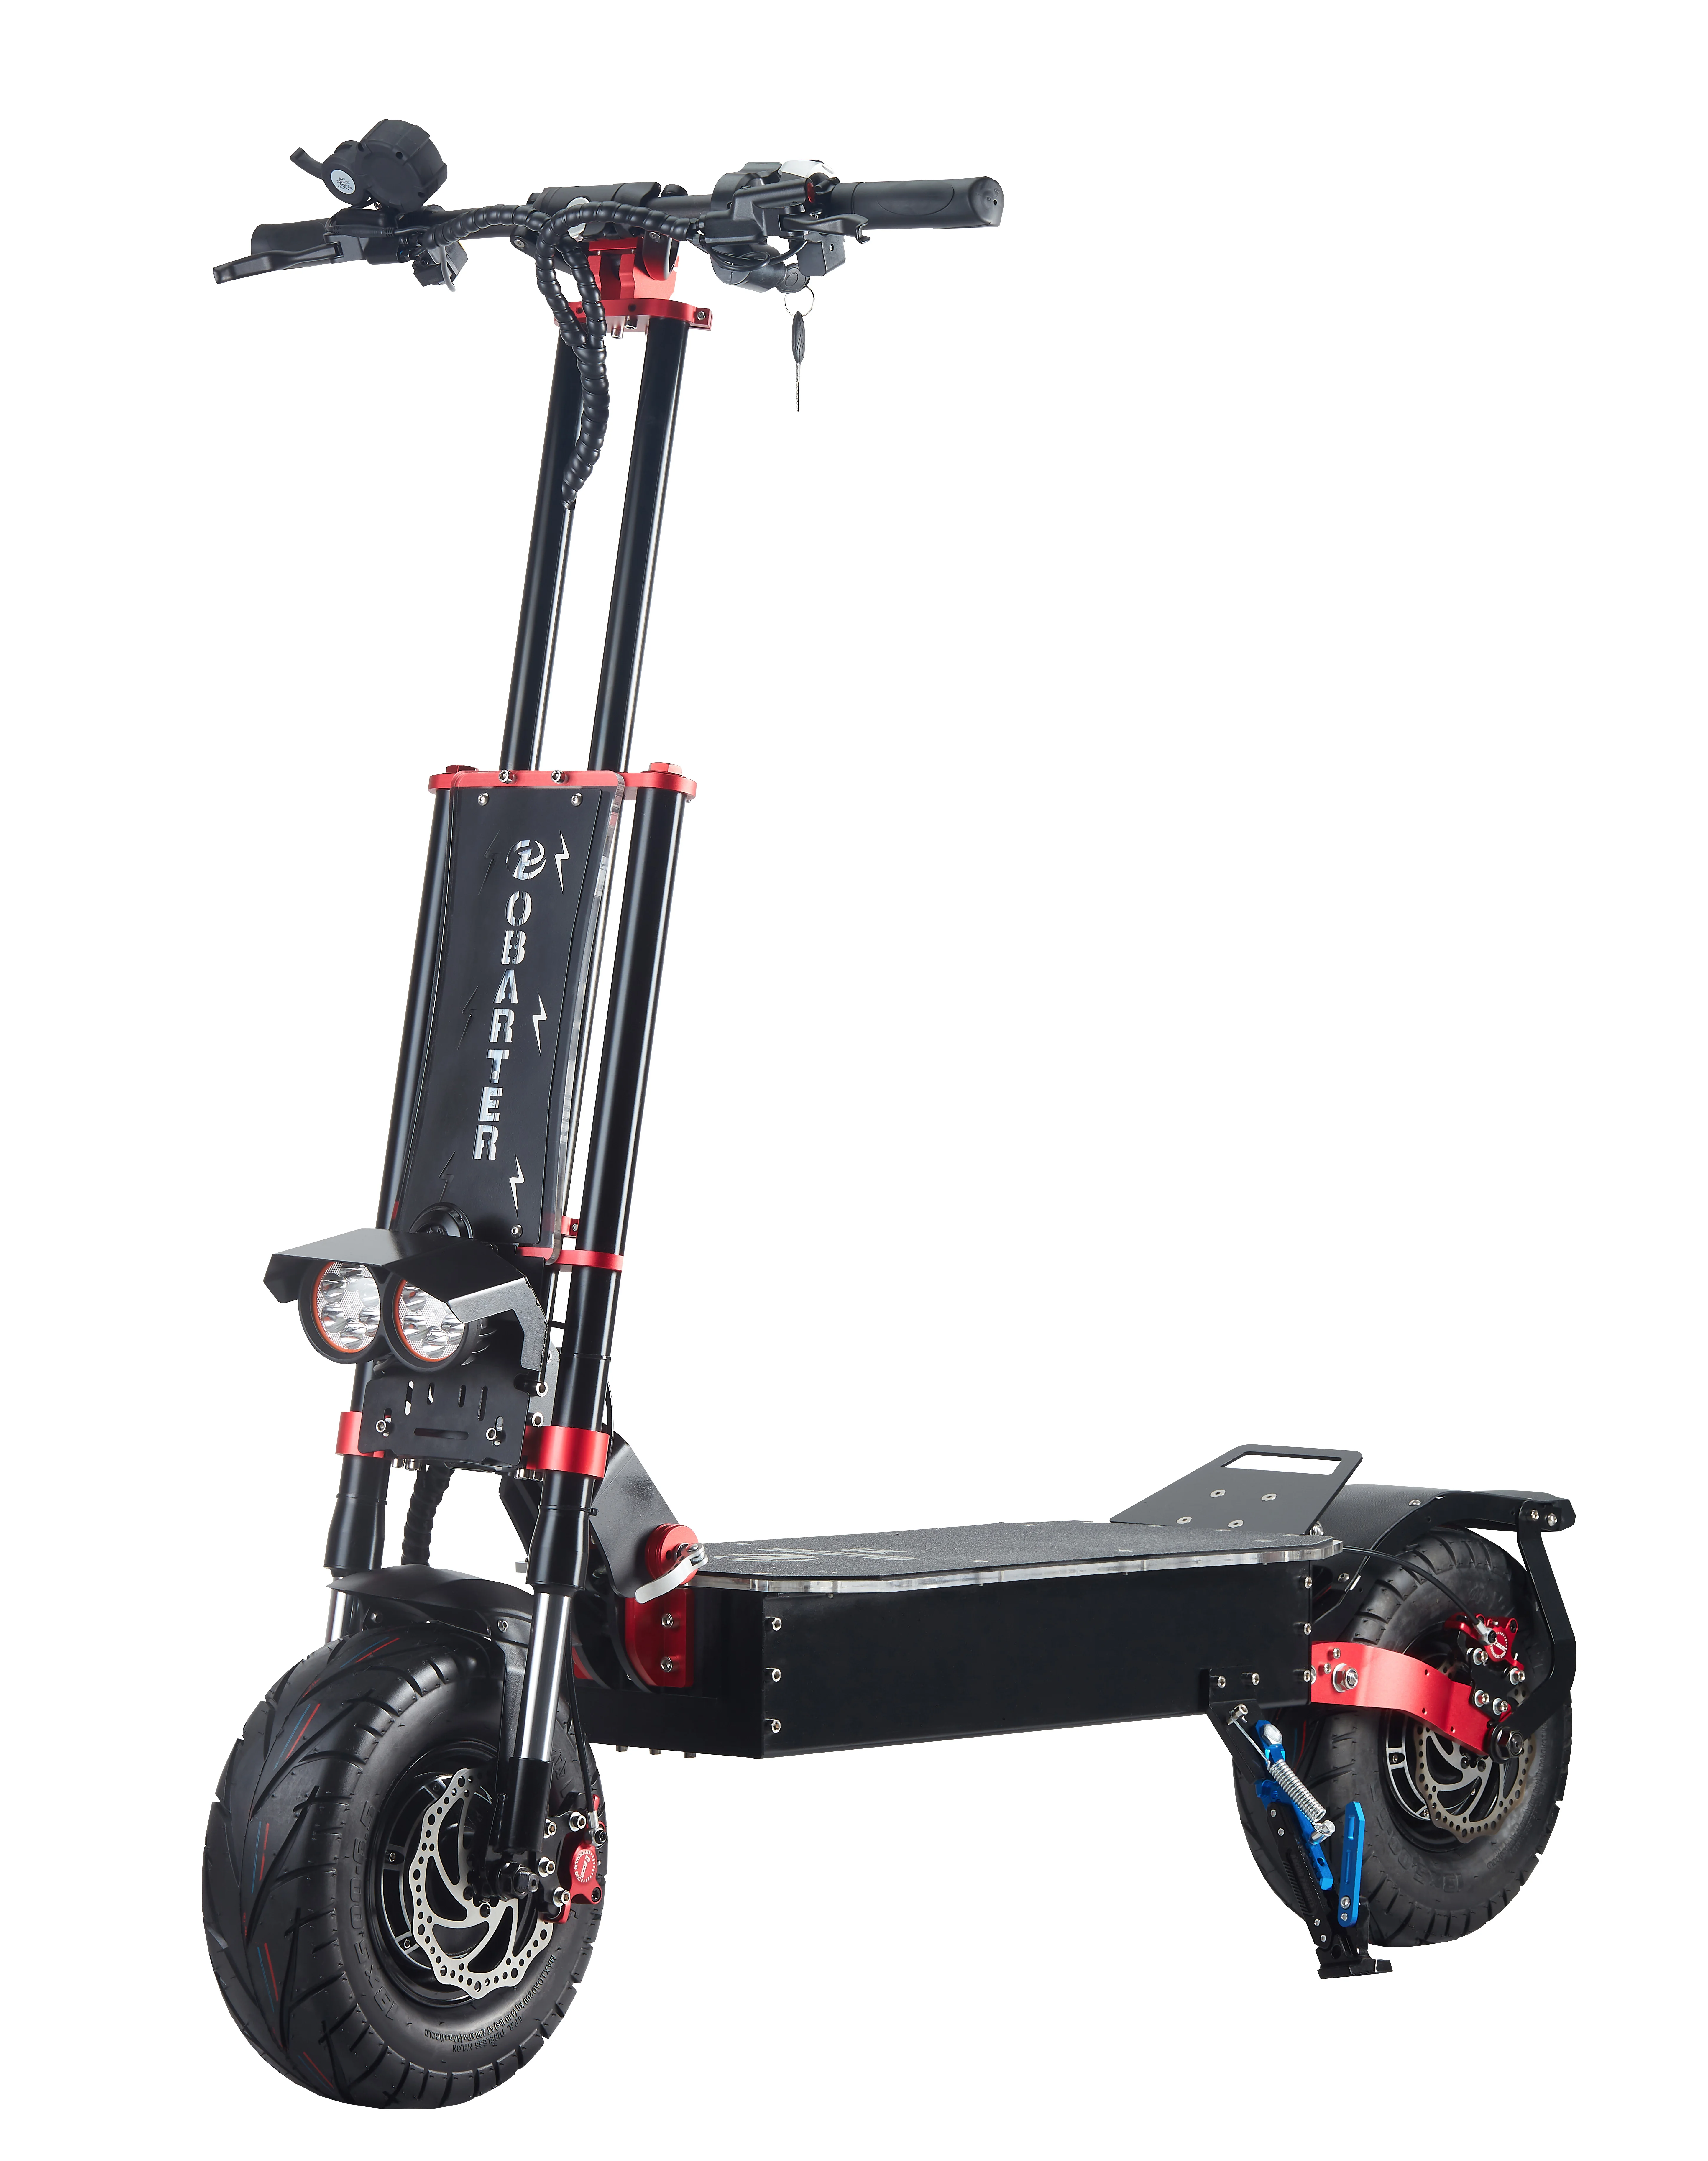 

Eu Uk warehouse OBARTER X5 X1 X3 folding big wheels 13 inch 60v 5600w 13ah high speed 85km/h electric scooter for adults